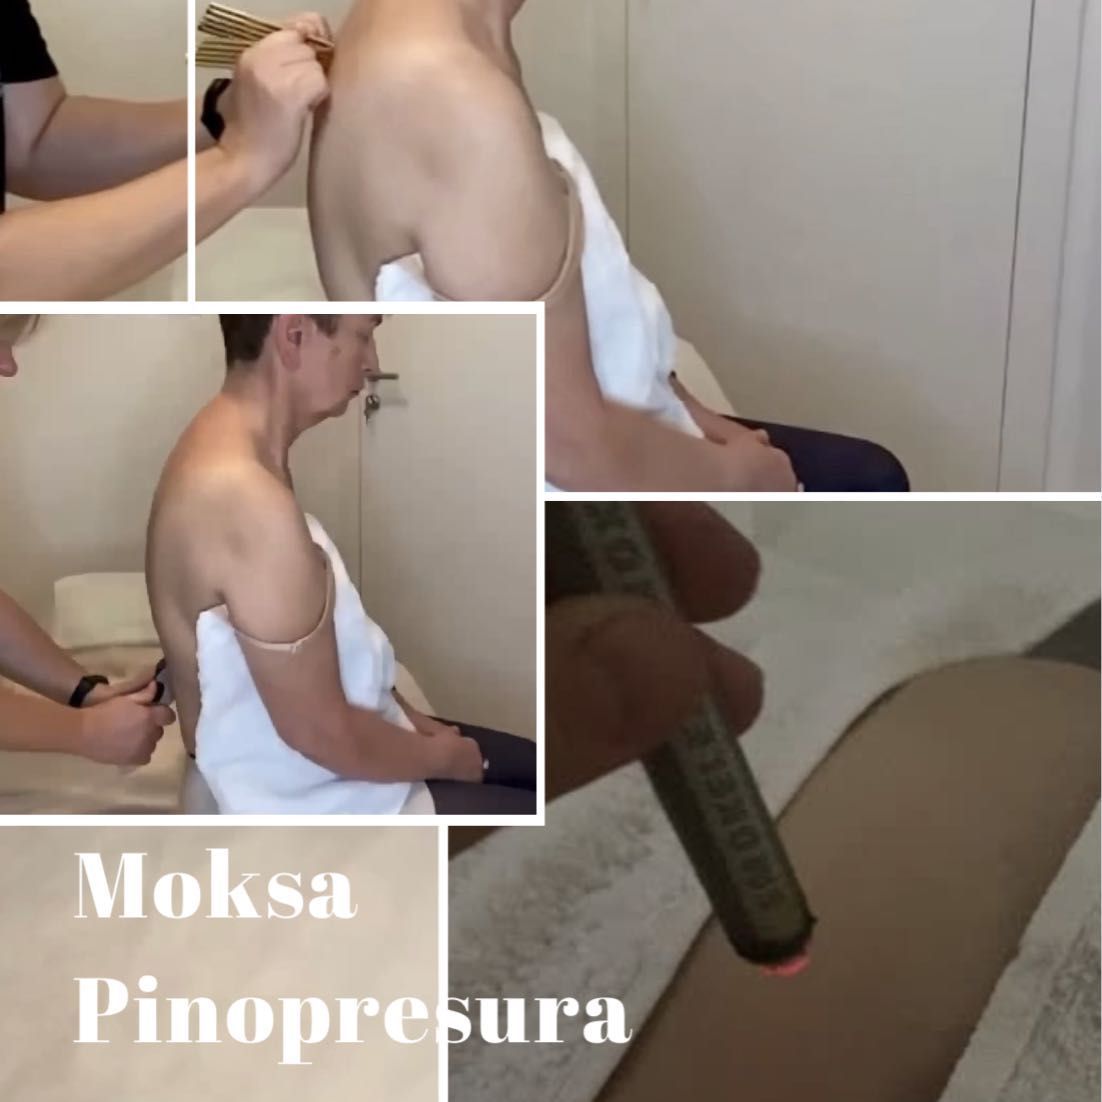 Portfolio usługi Moksoterapia z pinopresurą